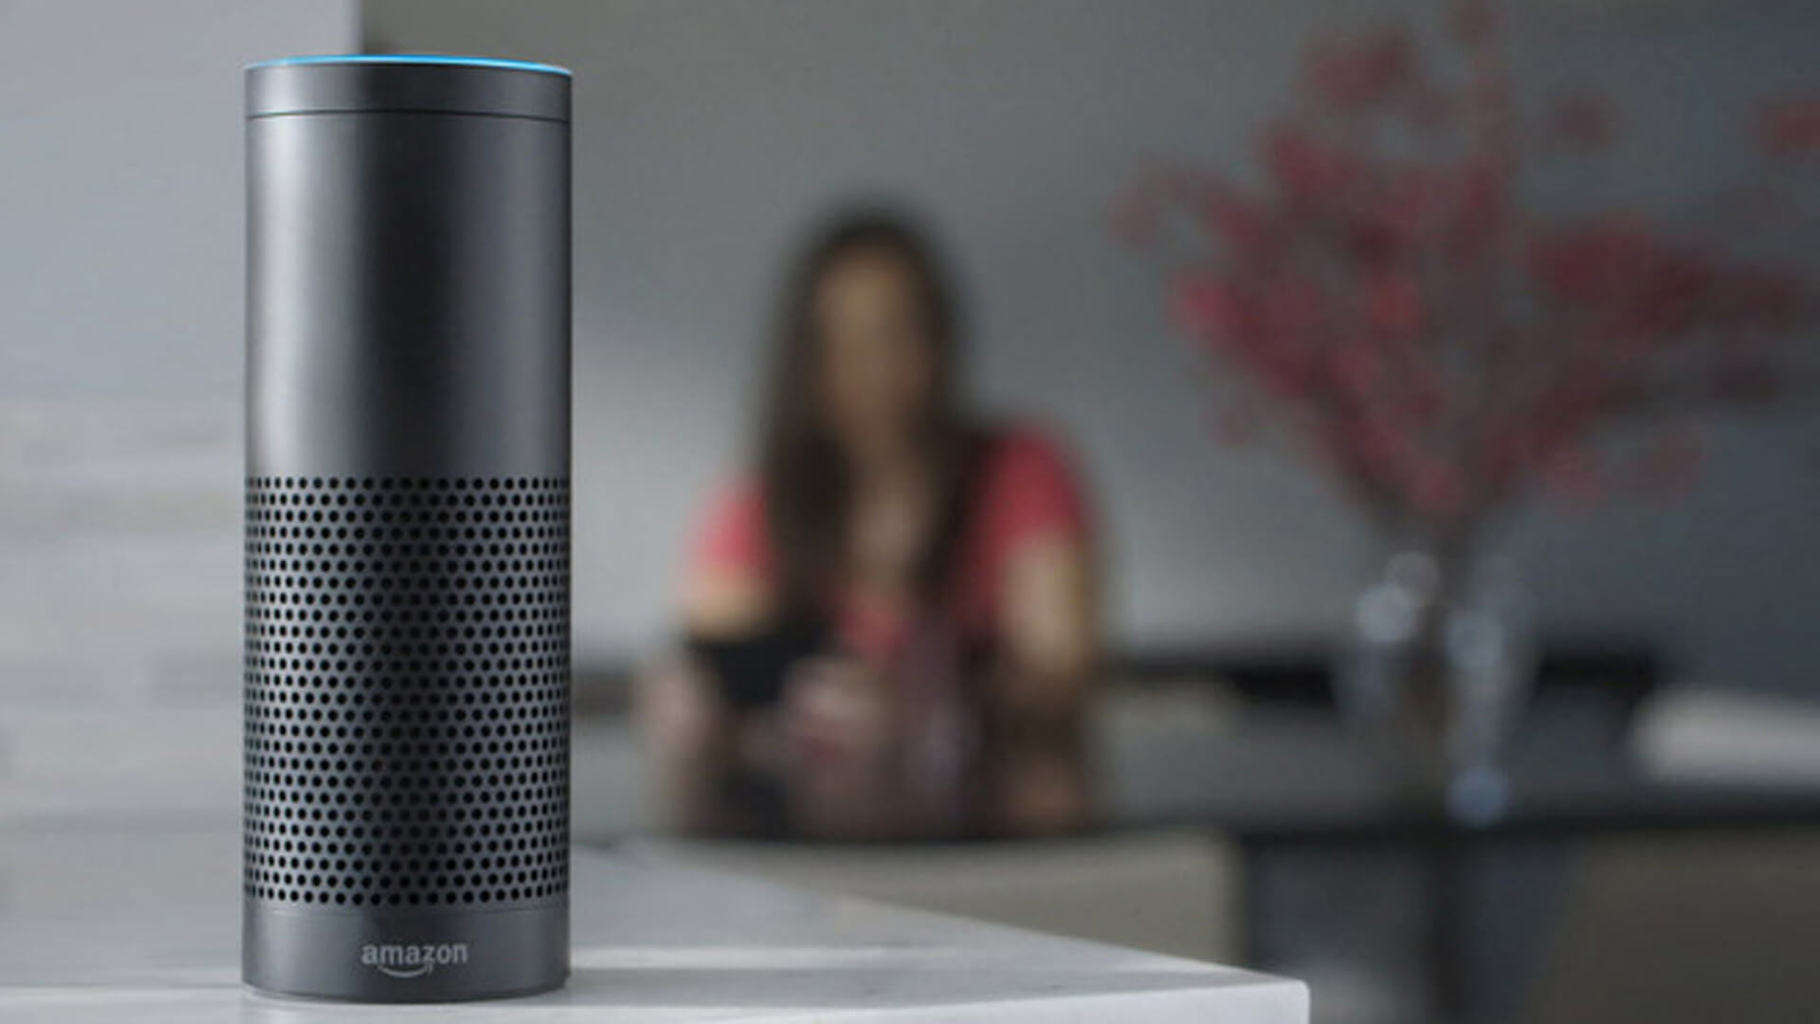 Should you get Amazon Echo?